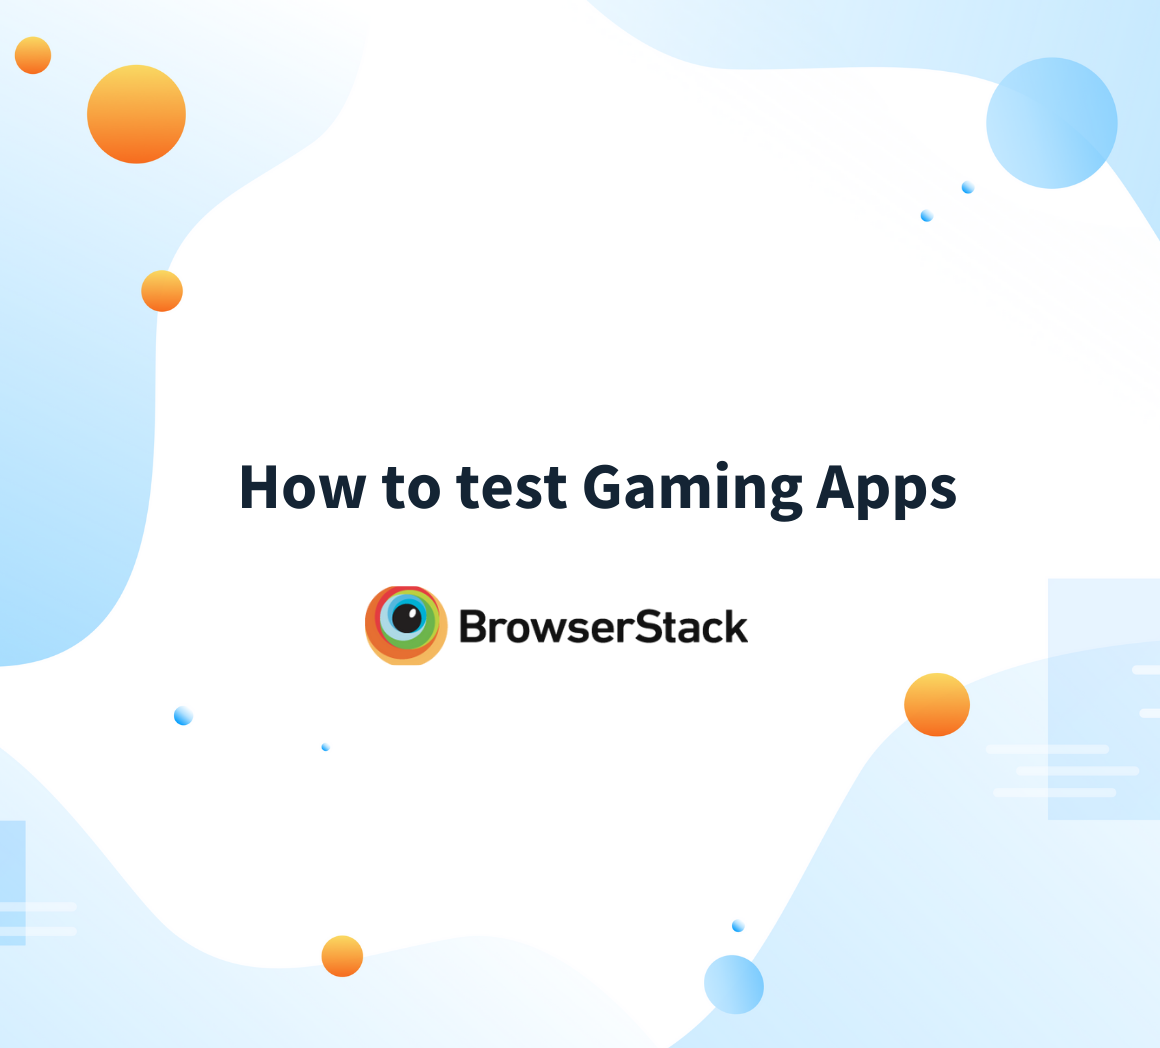 Testing Gaming Apps 101